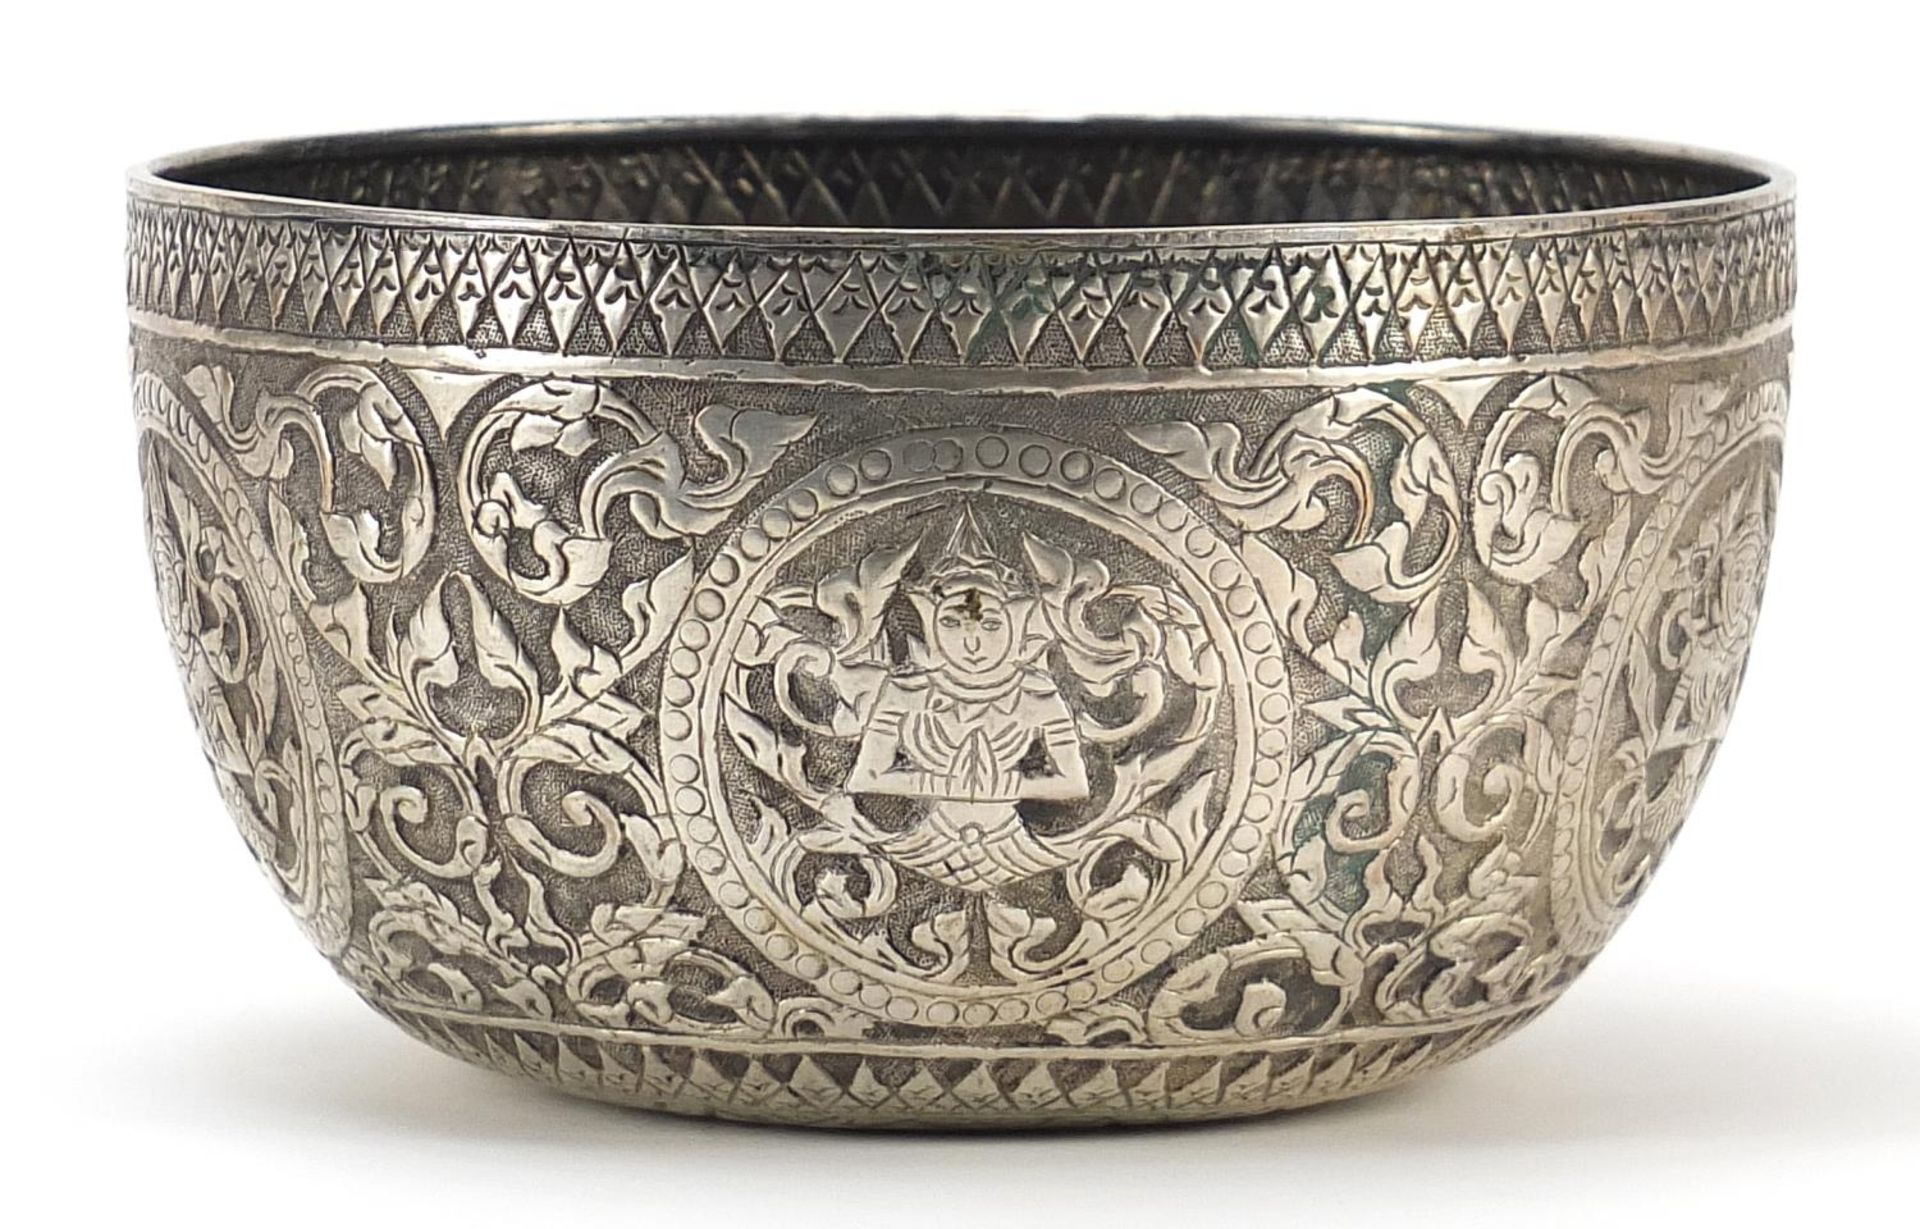 Thai silver coloured metal bowl embossed with deities amongst flowers, 15.5cm in diameter, 111g - Image 2 of 3